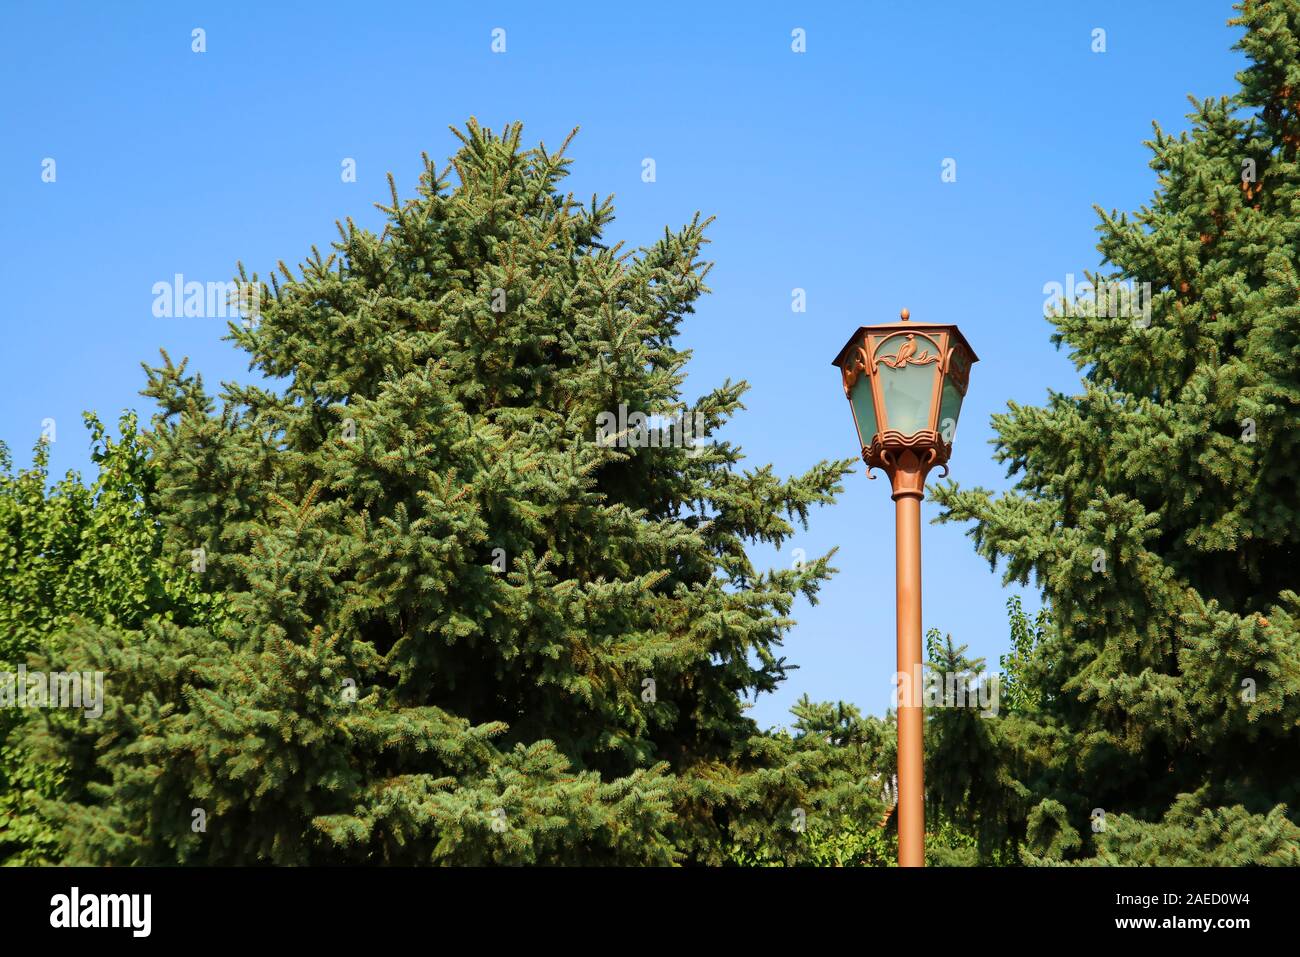 Street Lamp among large Fir Trees against Sunny Blue Sky Stock Photo